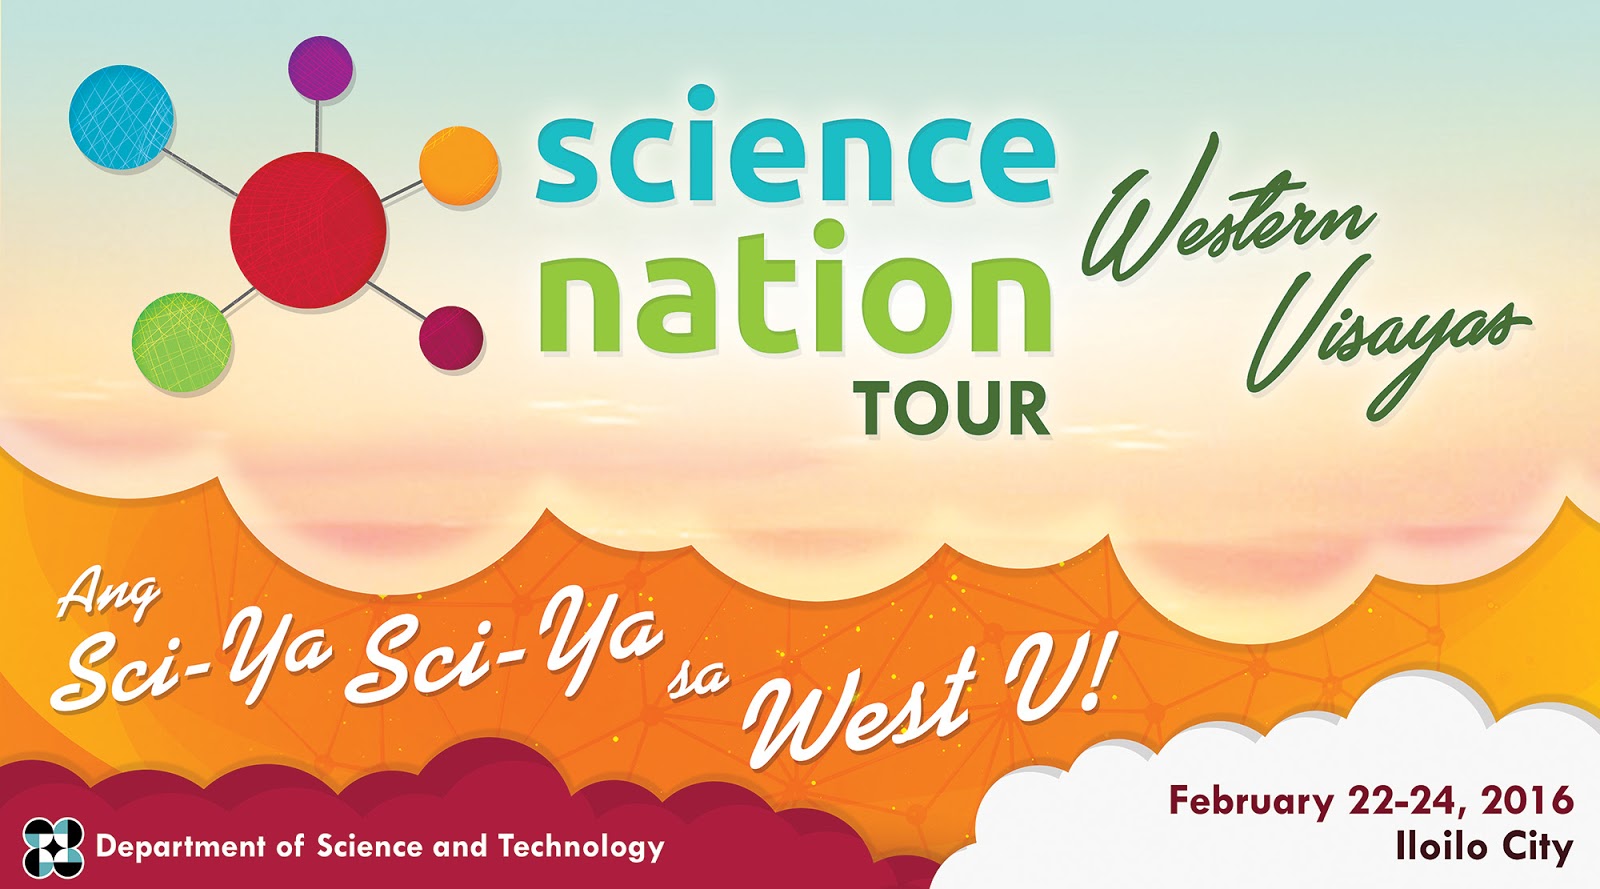 Science Nation Tour Western Visayas